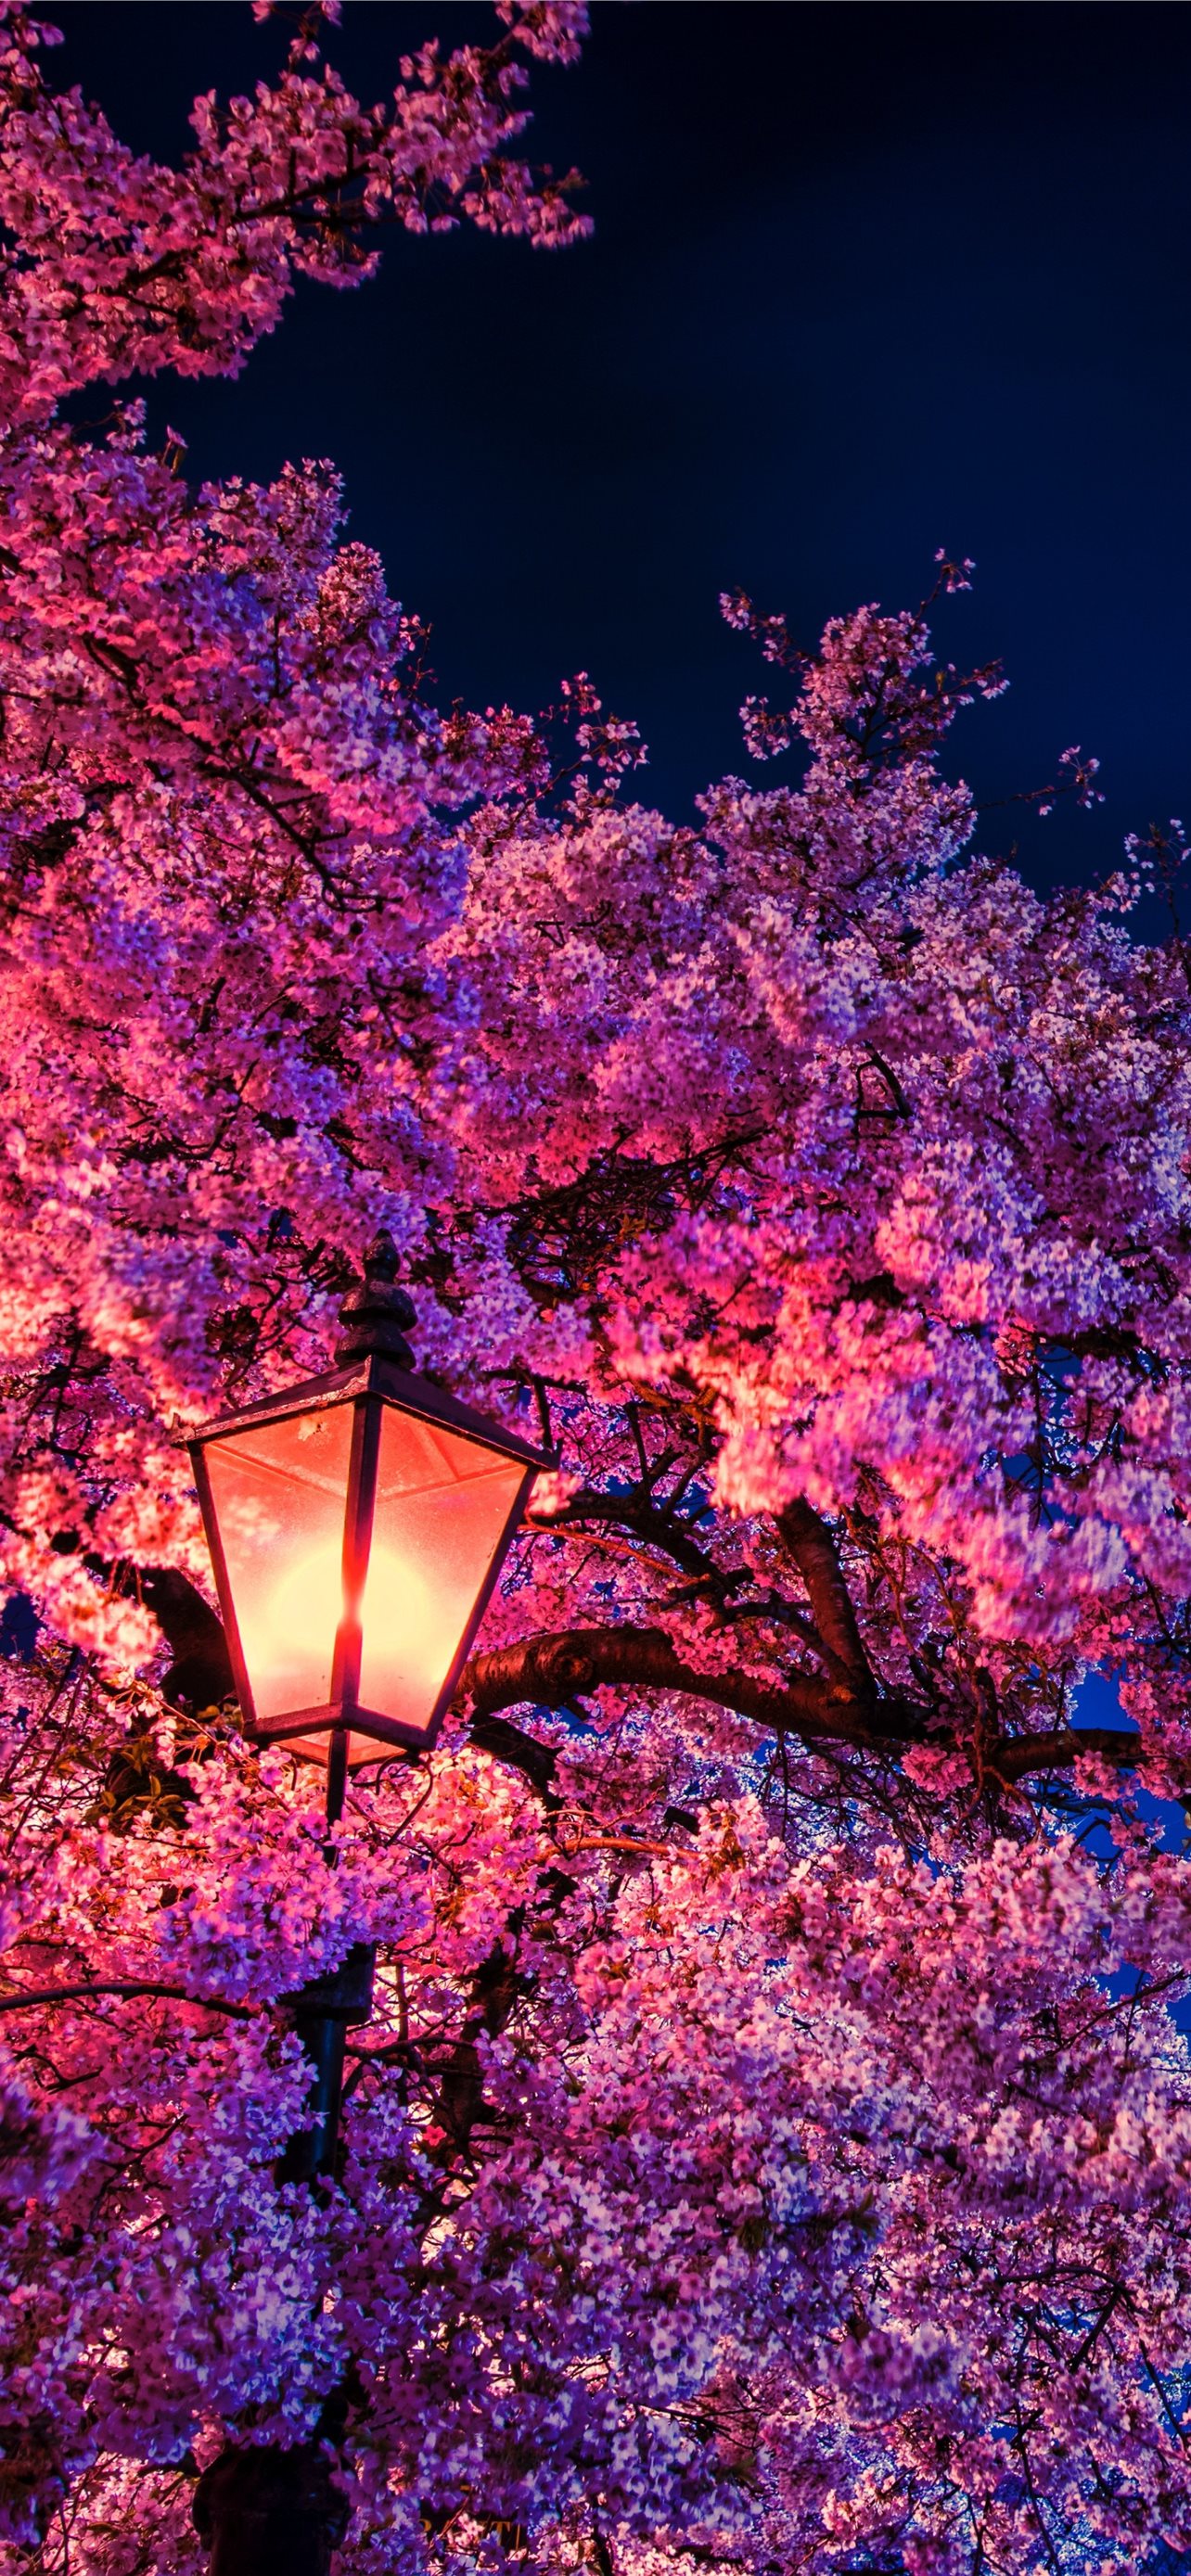 Best Cherry blossoms iPhone HD Wallpaper